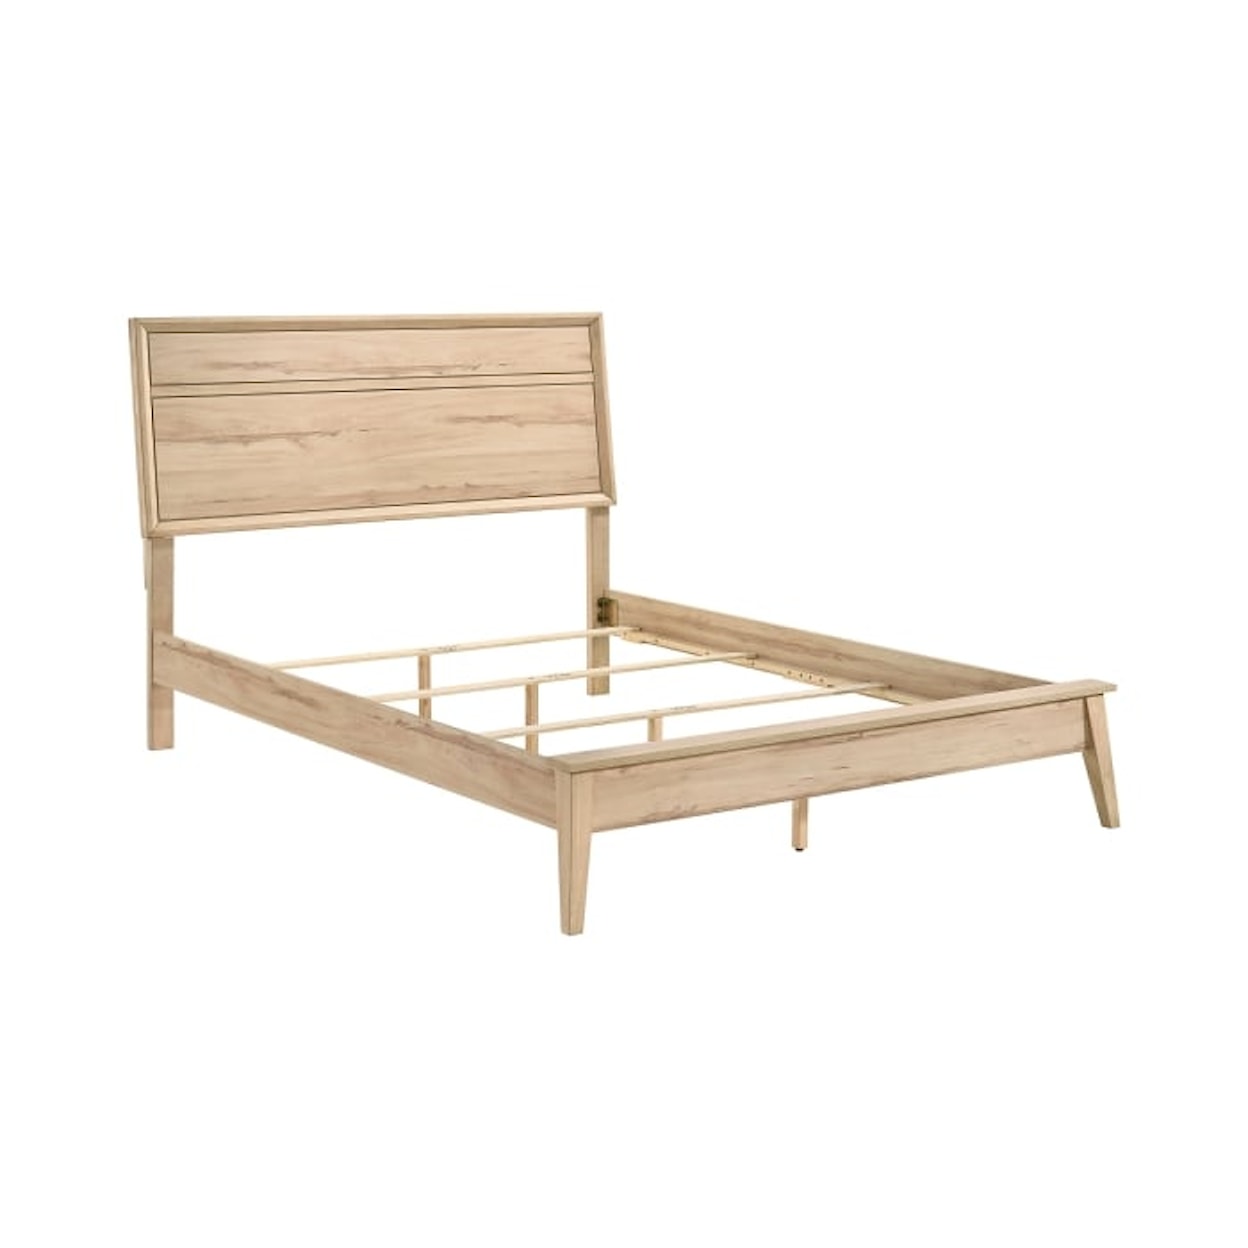 Homelegance Furniture Marrin California King Panel Bed